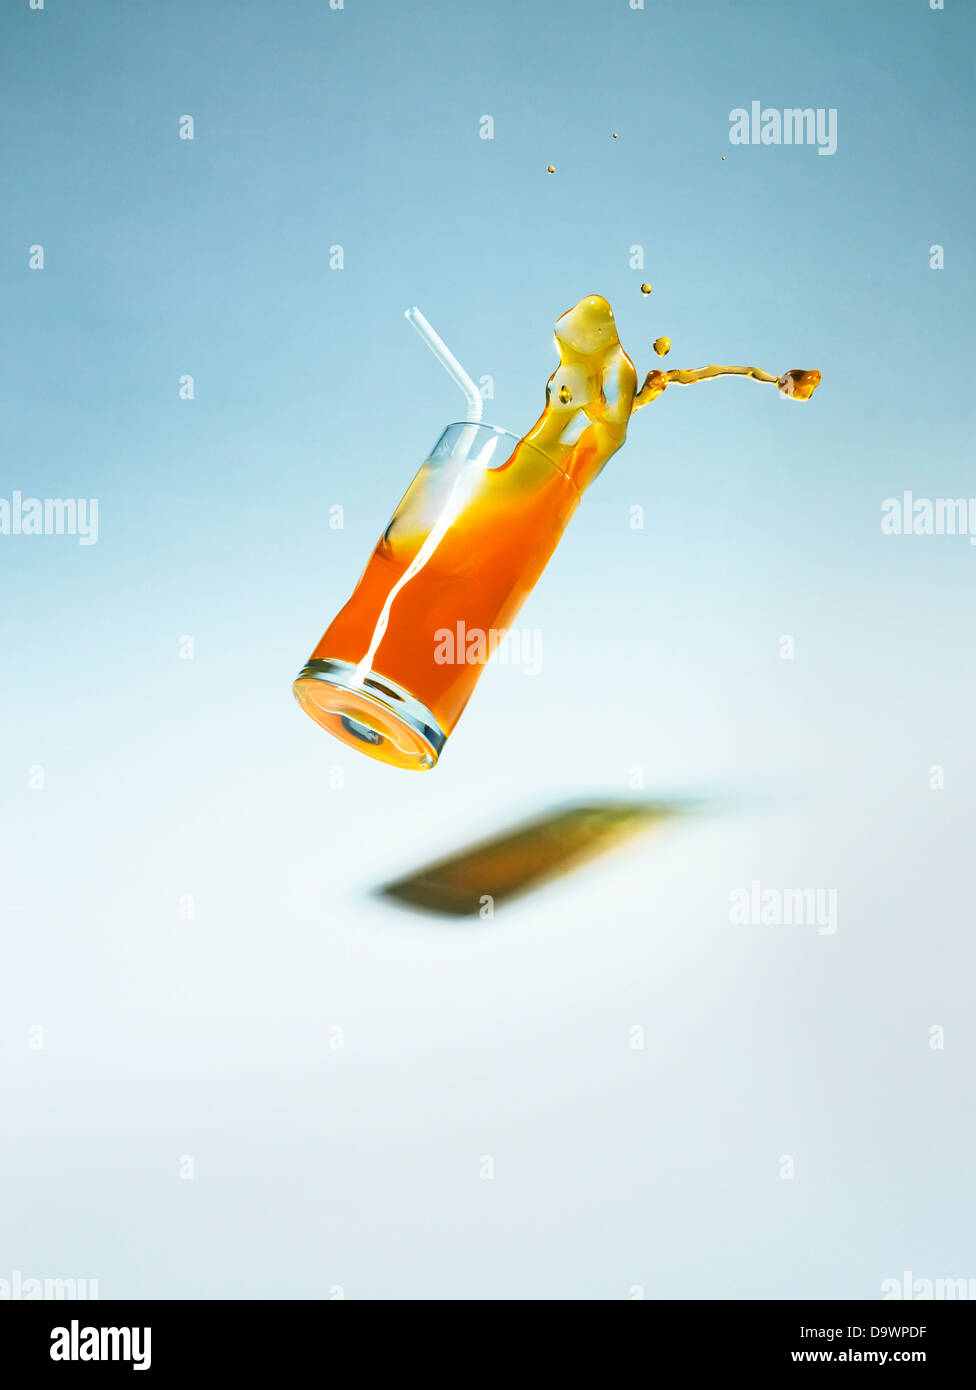 falling drink Stock Photo